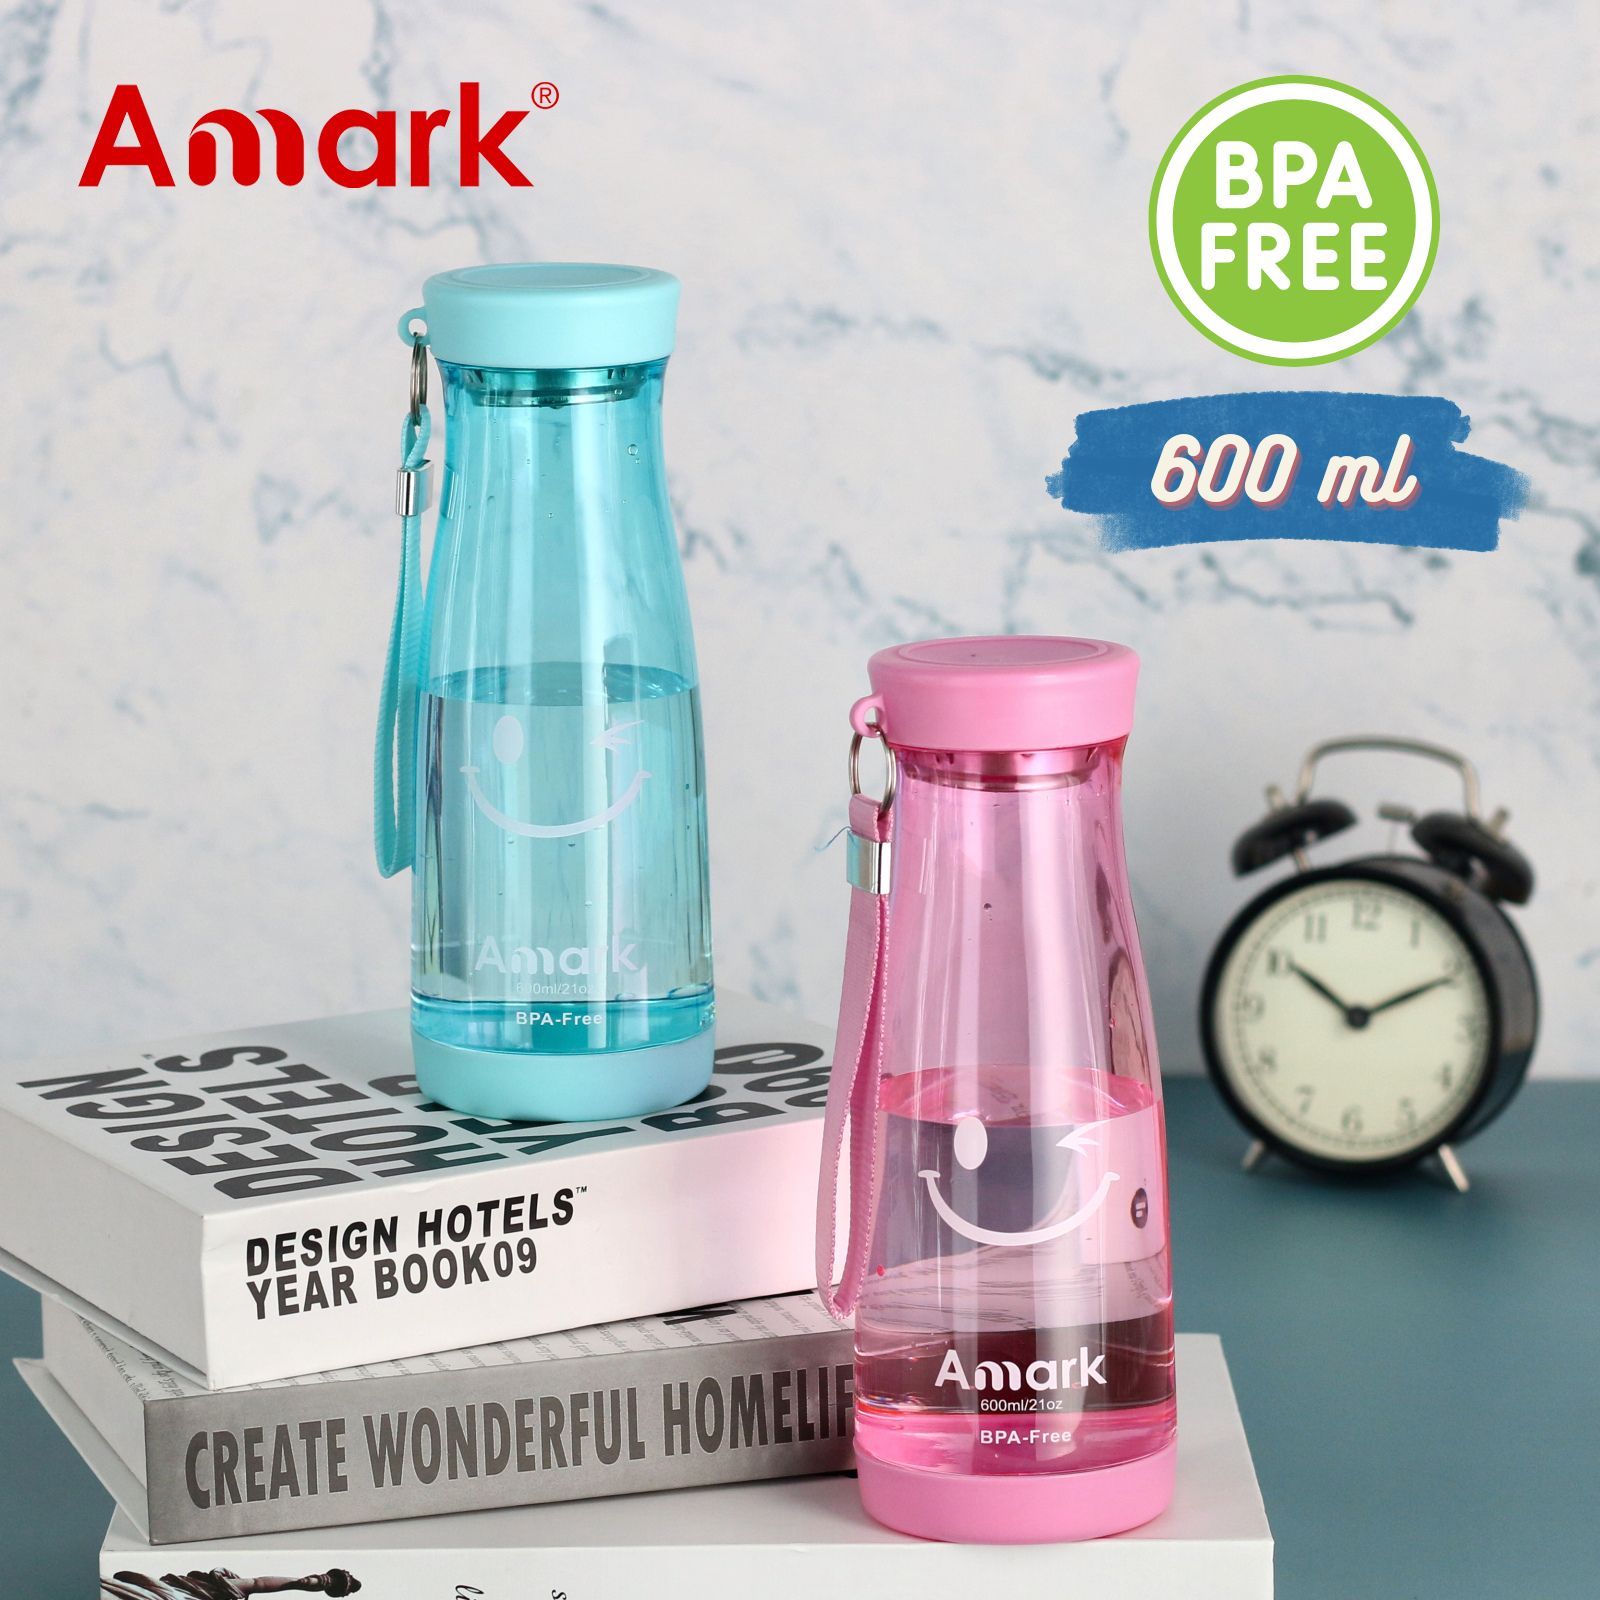 Amark Smiley BPA-Free Polycarbonate Water Bottle 600ml